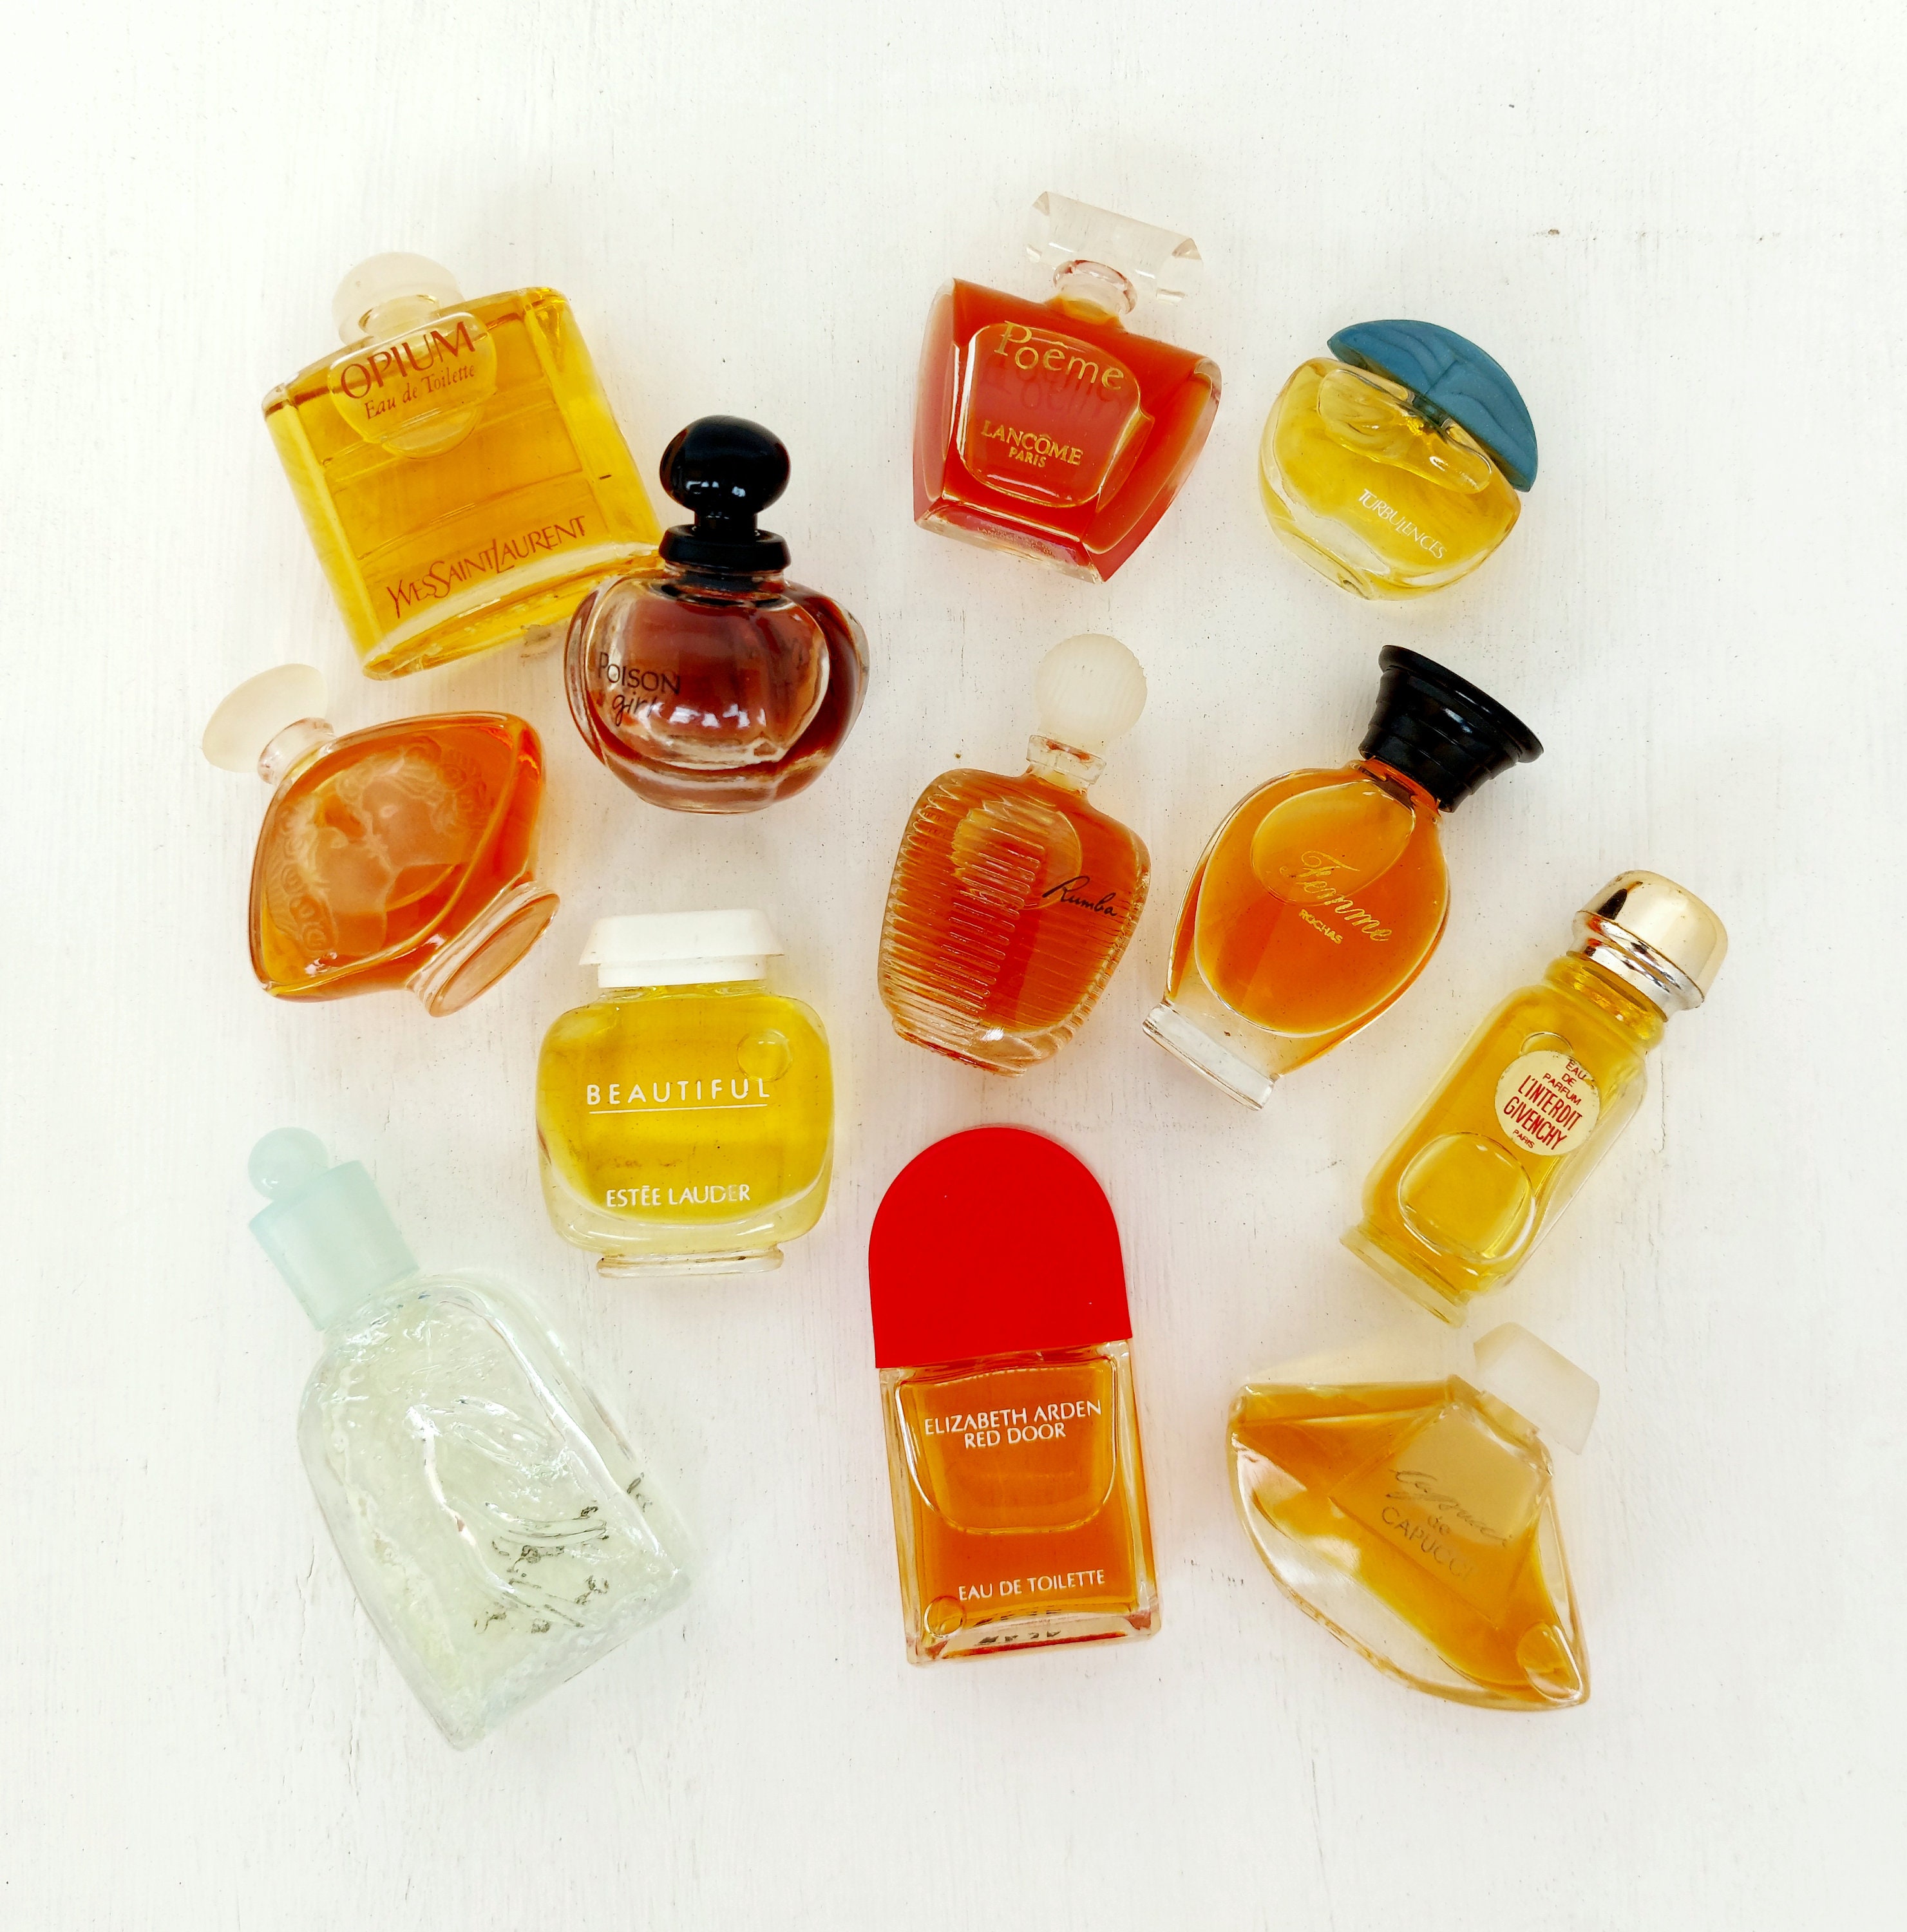 RARE* Vintage 90s Yves Saint Laurent CHAMPAGNE Perfume EDT 50 ML 1.6 OZ  Spray